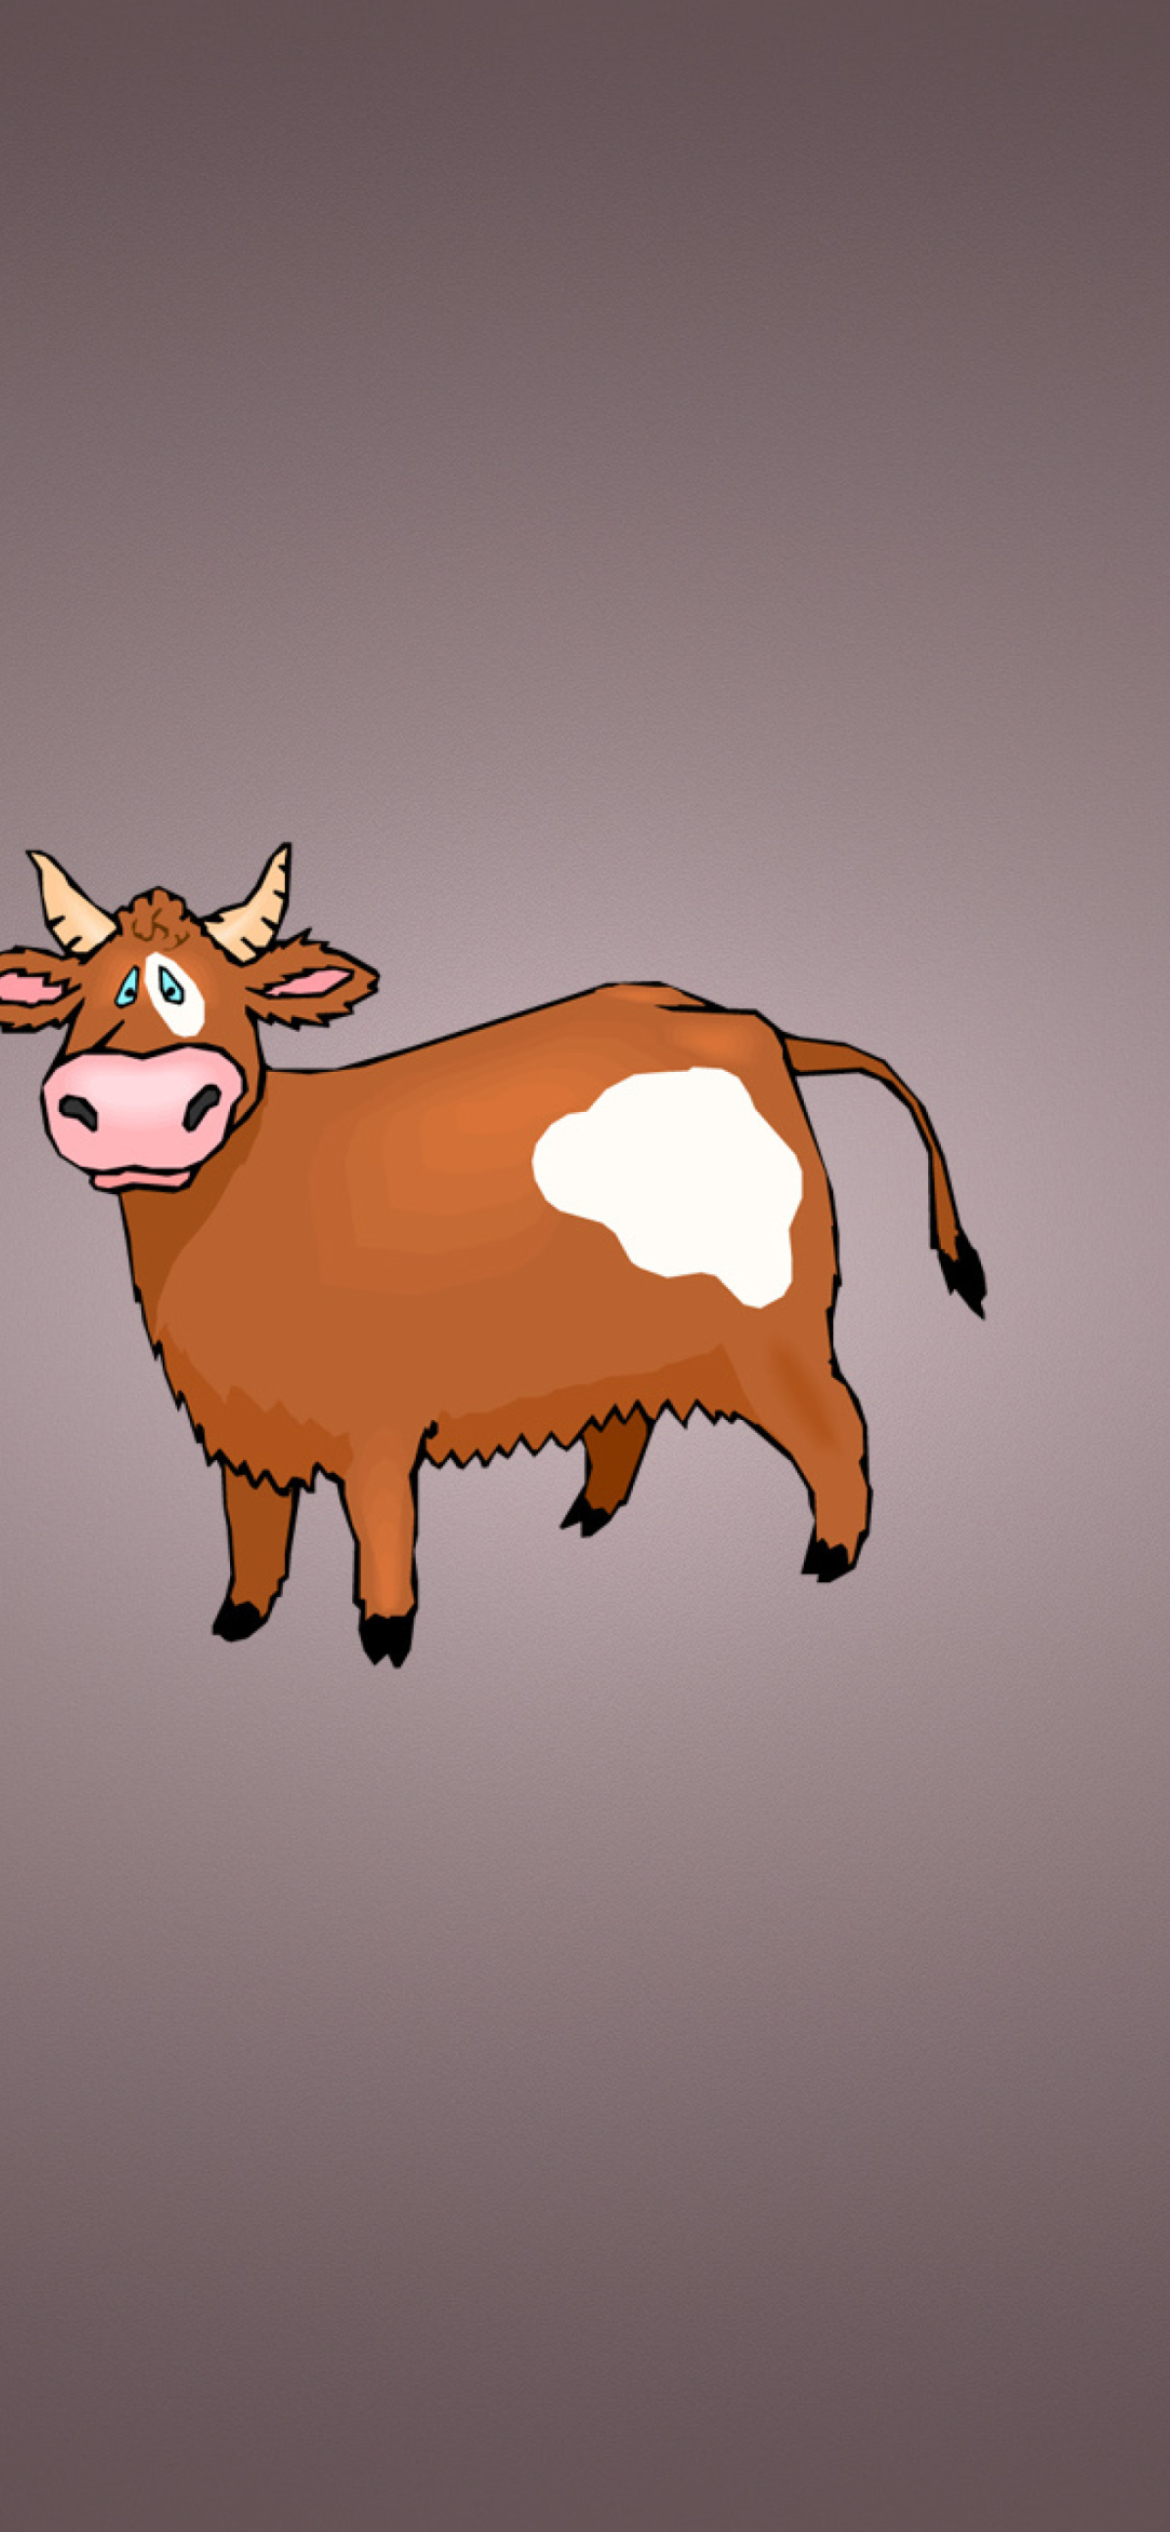 Funny Cow Illustration wallpaper 1170x2532